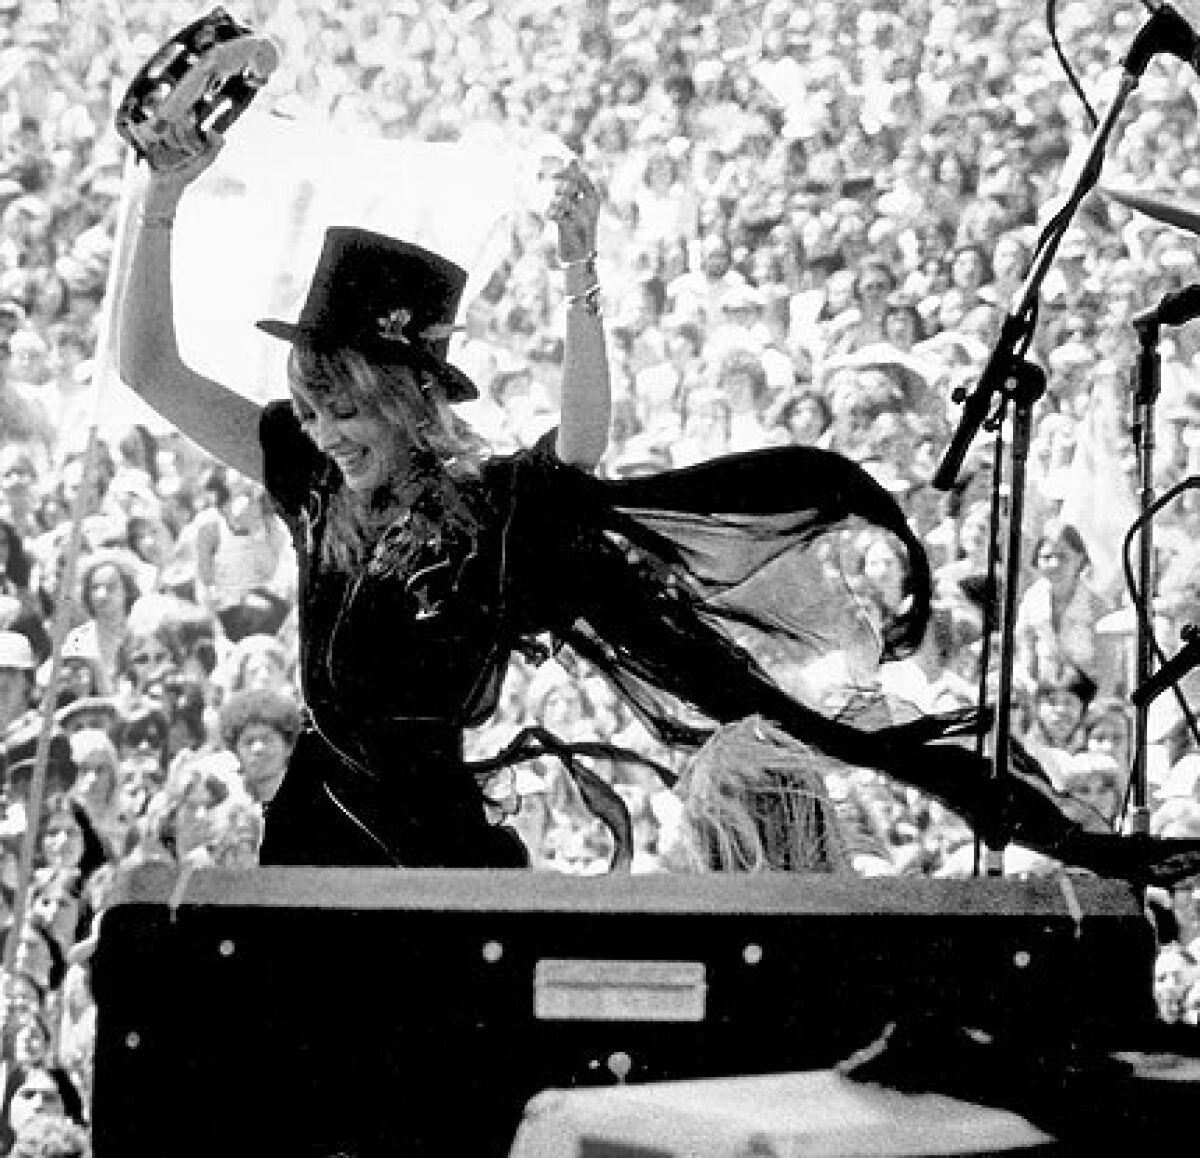 Stevie Nicks in concert with Fleetwood Mac